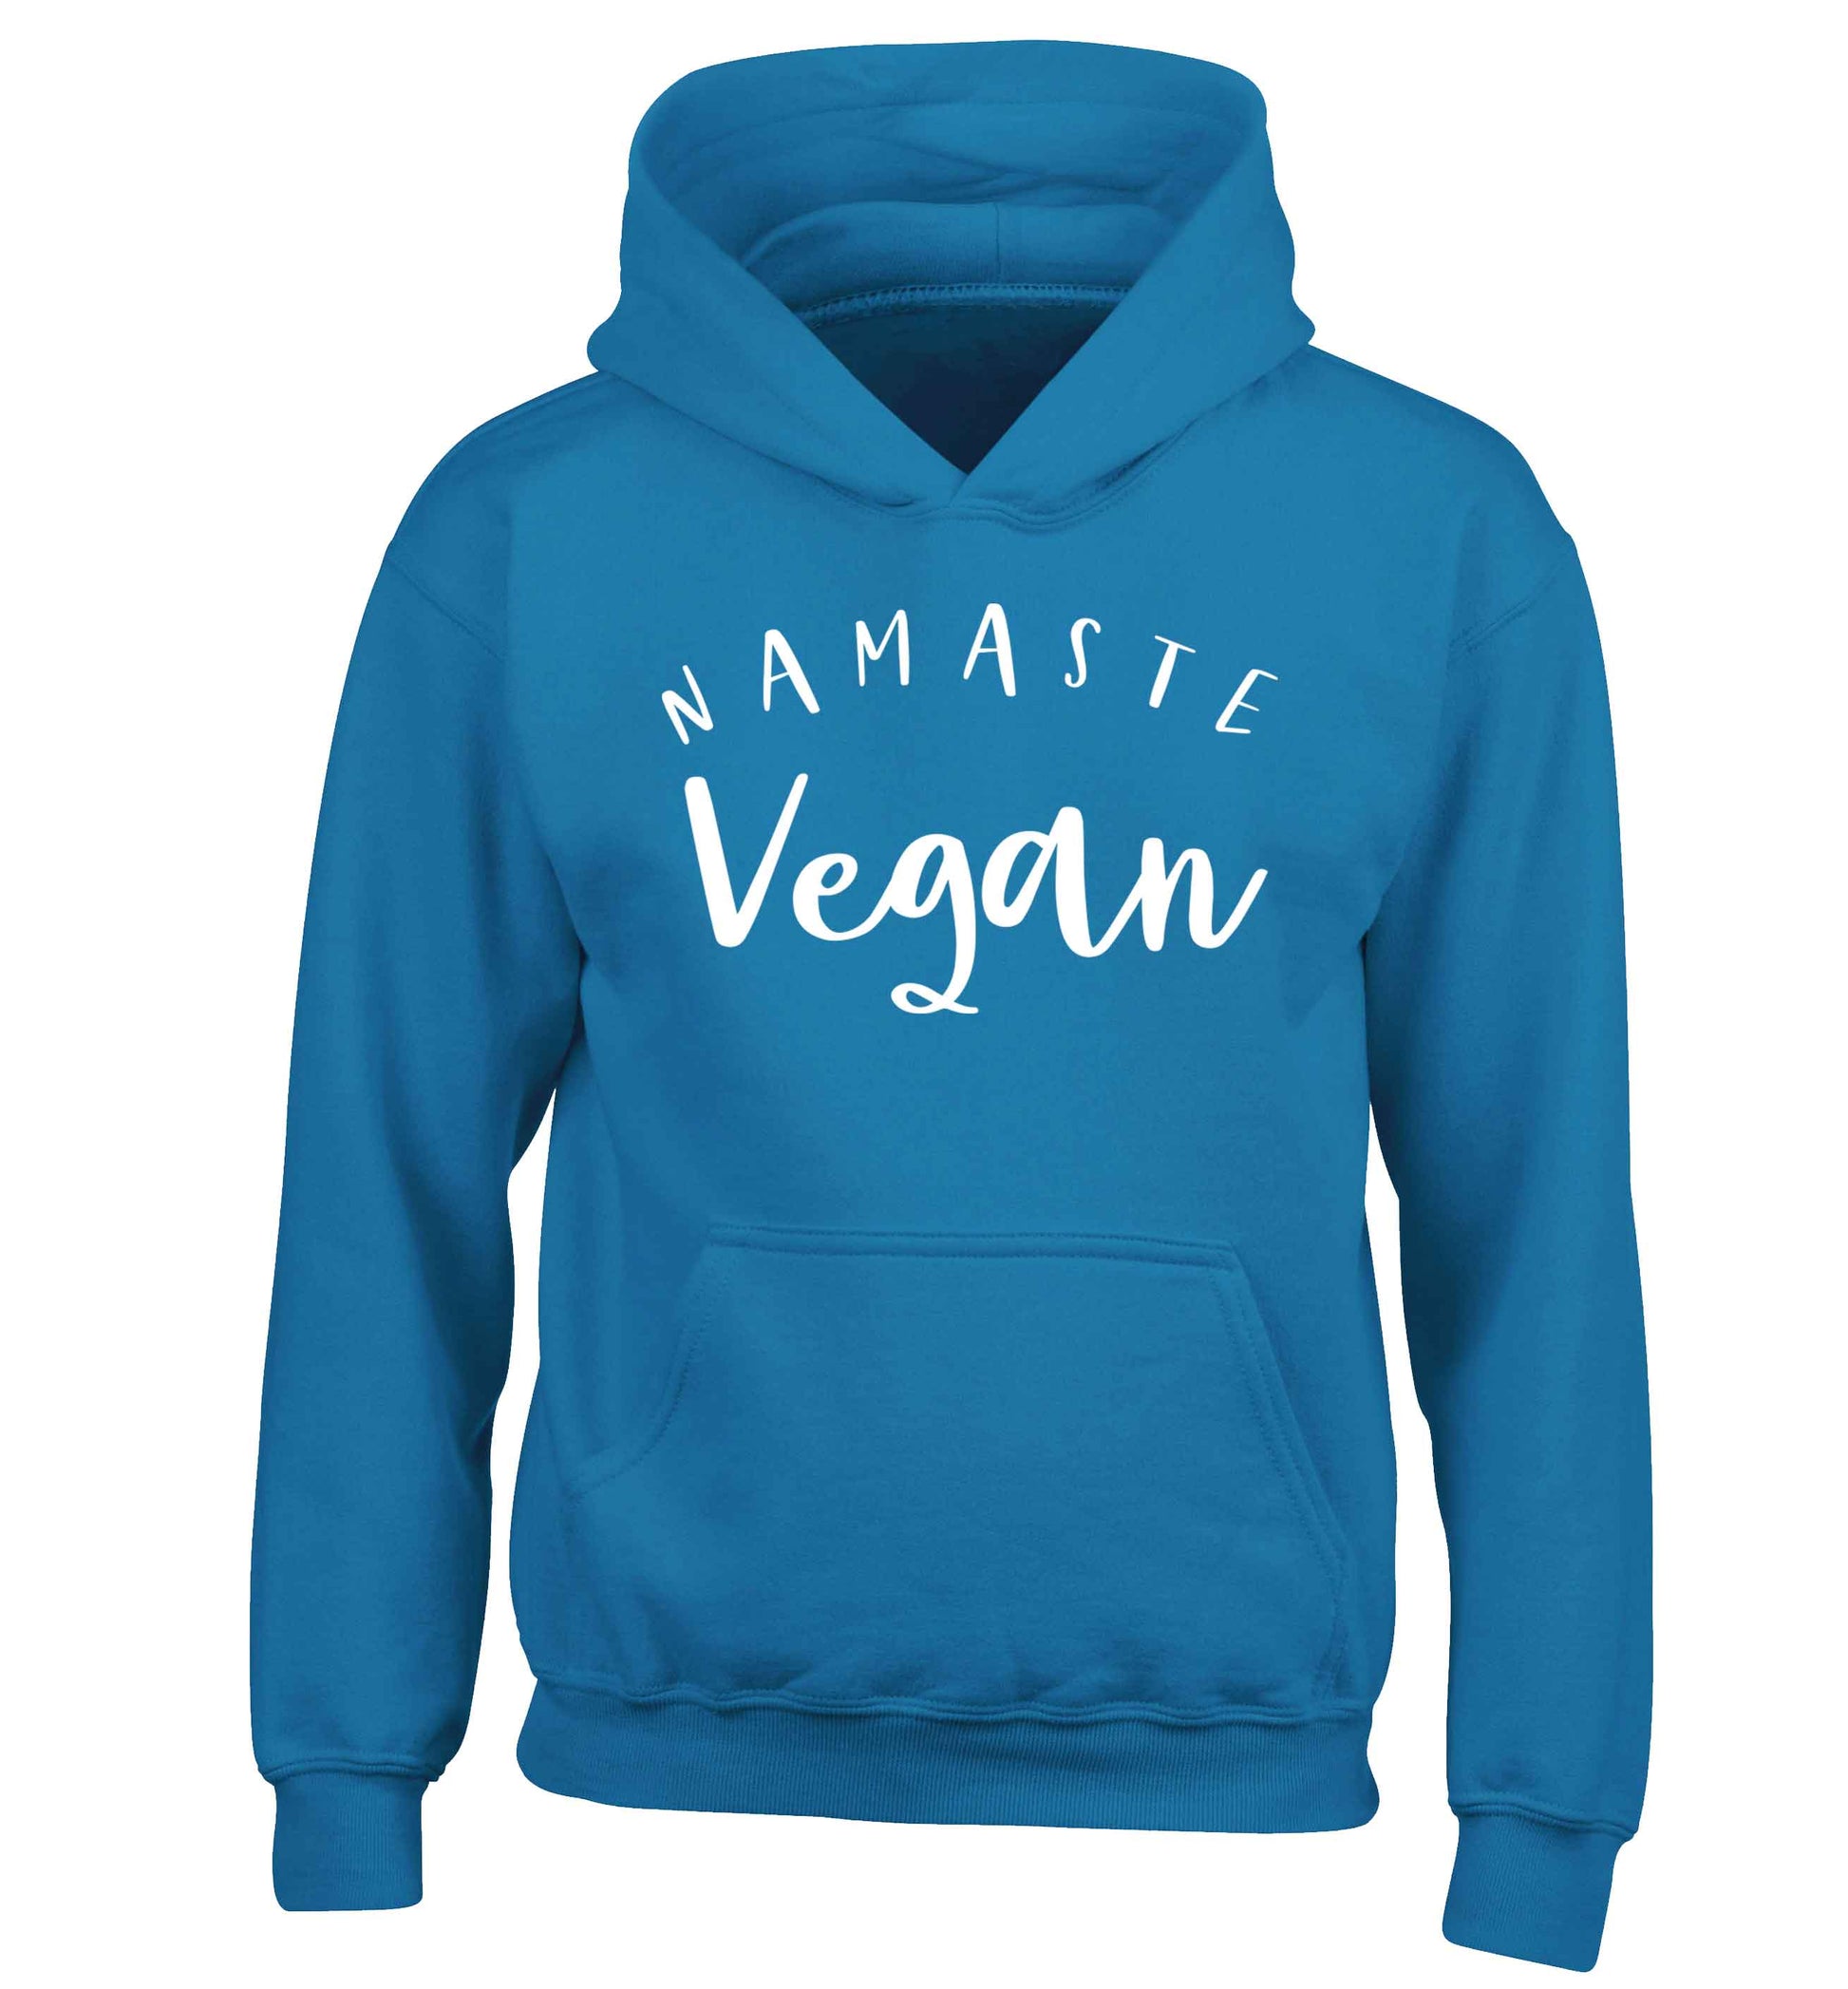 Namaste vegan children's blue hoodie 12-13 Years